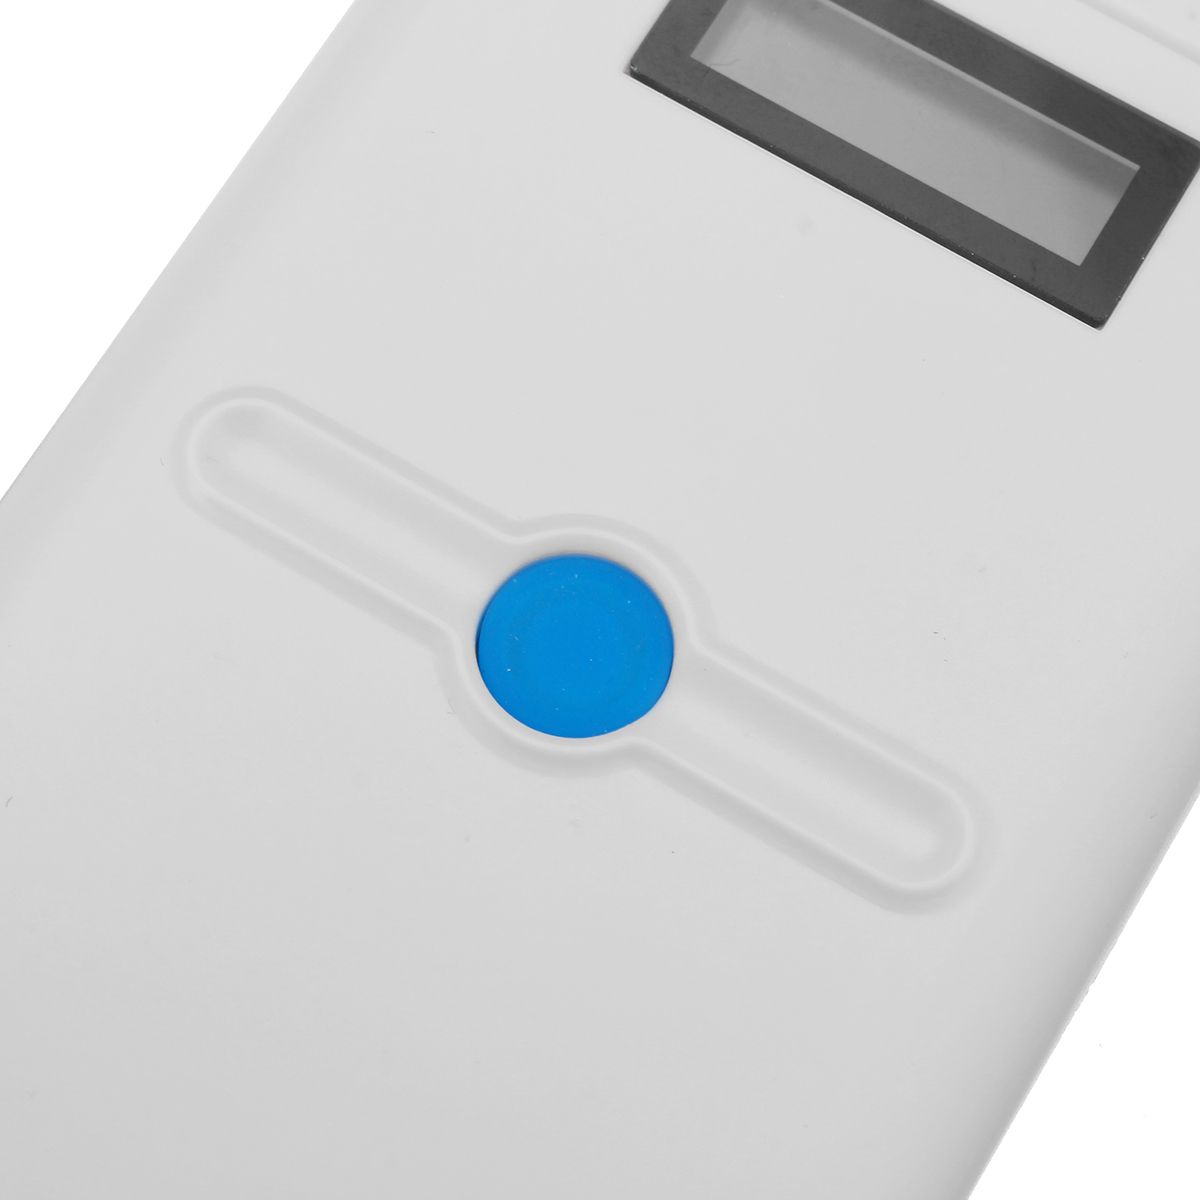 1342kHZ-Portable-Animal-ID-Reader-ISO-OLED-RFID-Dog-Pet-USB-Microchip-Scanner-1726700